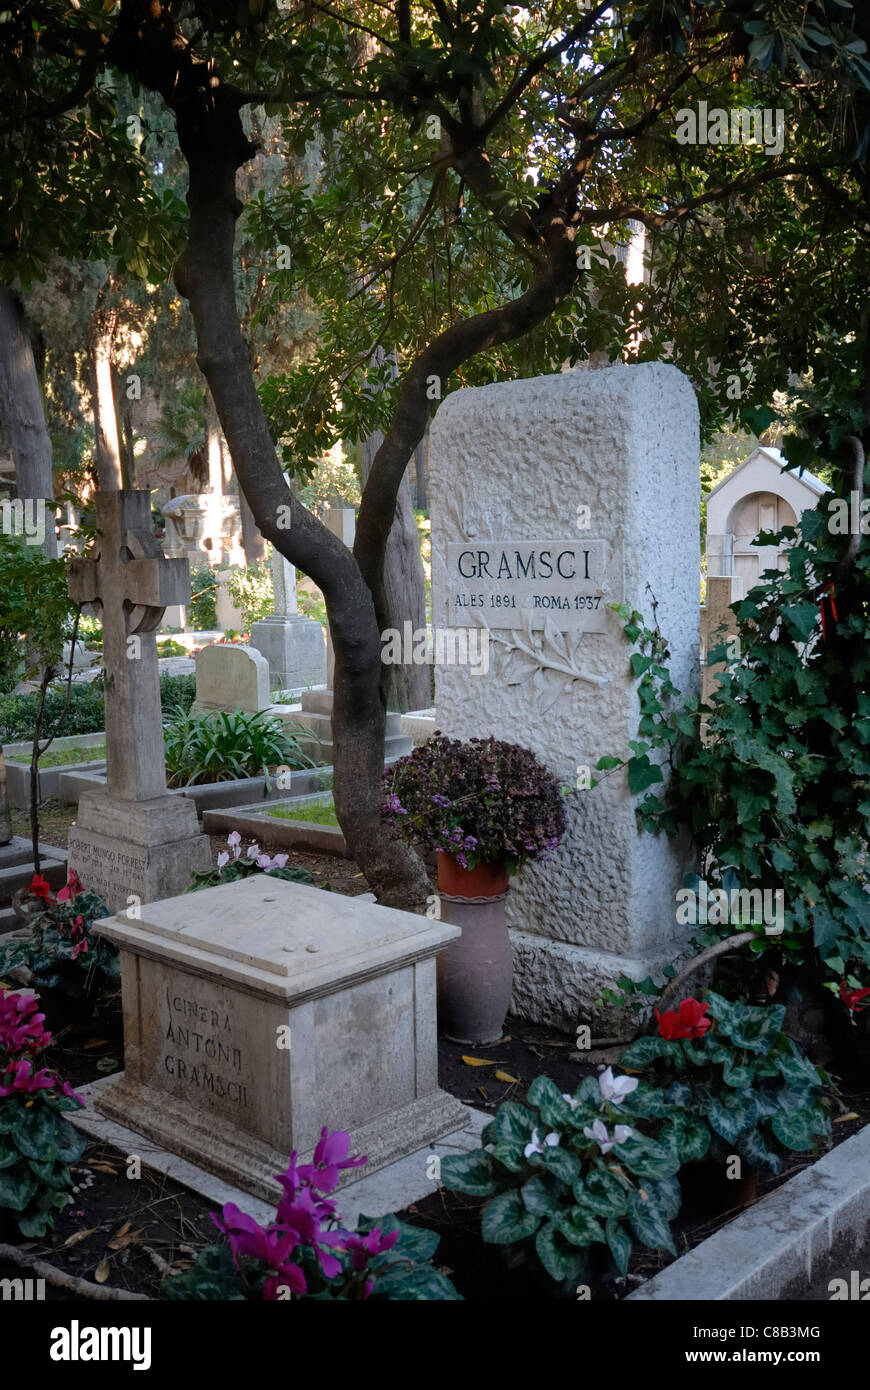 Grave of Antonio Gramsci founder of the Italian Communist Party in the Protestant Cemetery. (Cimitero Acattolico) Rome Italy. Stock Photo